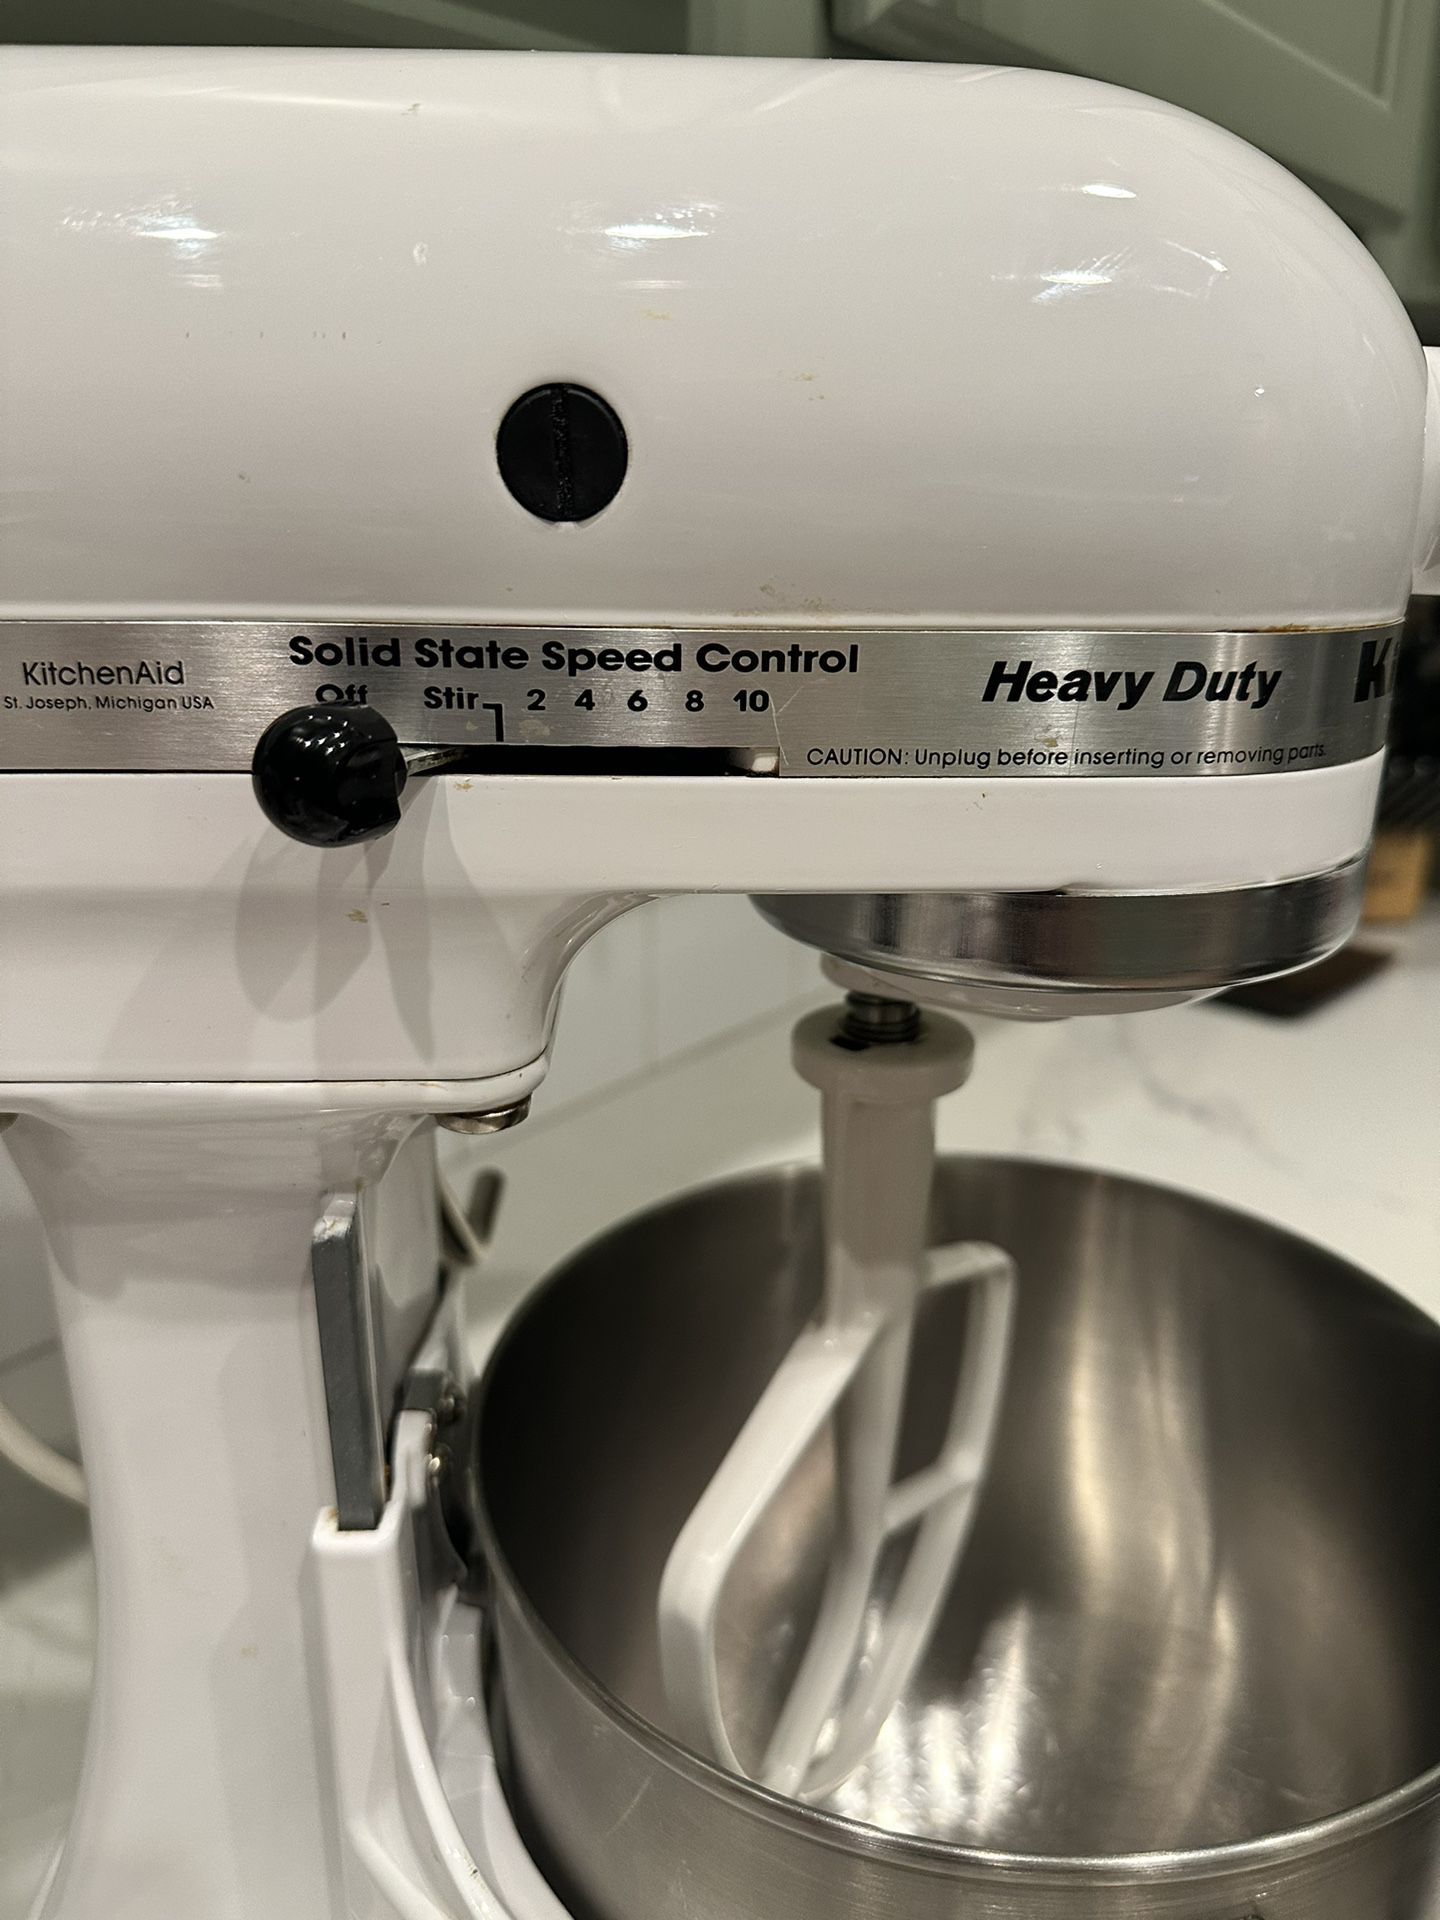 KitchenAid K5SS Heavy Duty Series 5qt Stand Mixer - White for sale online